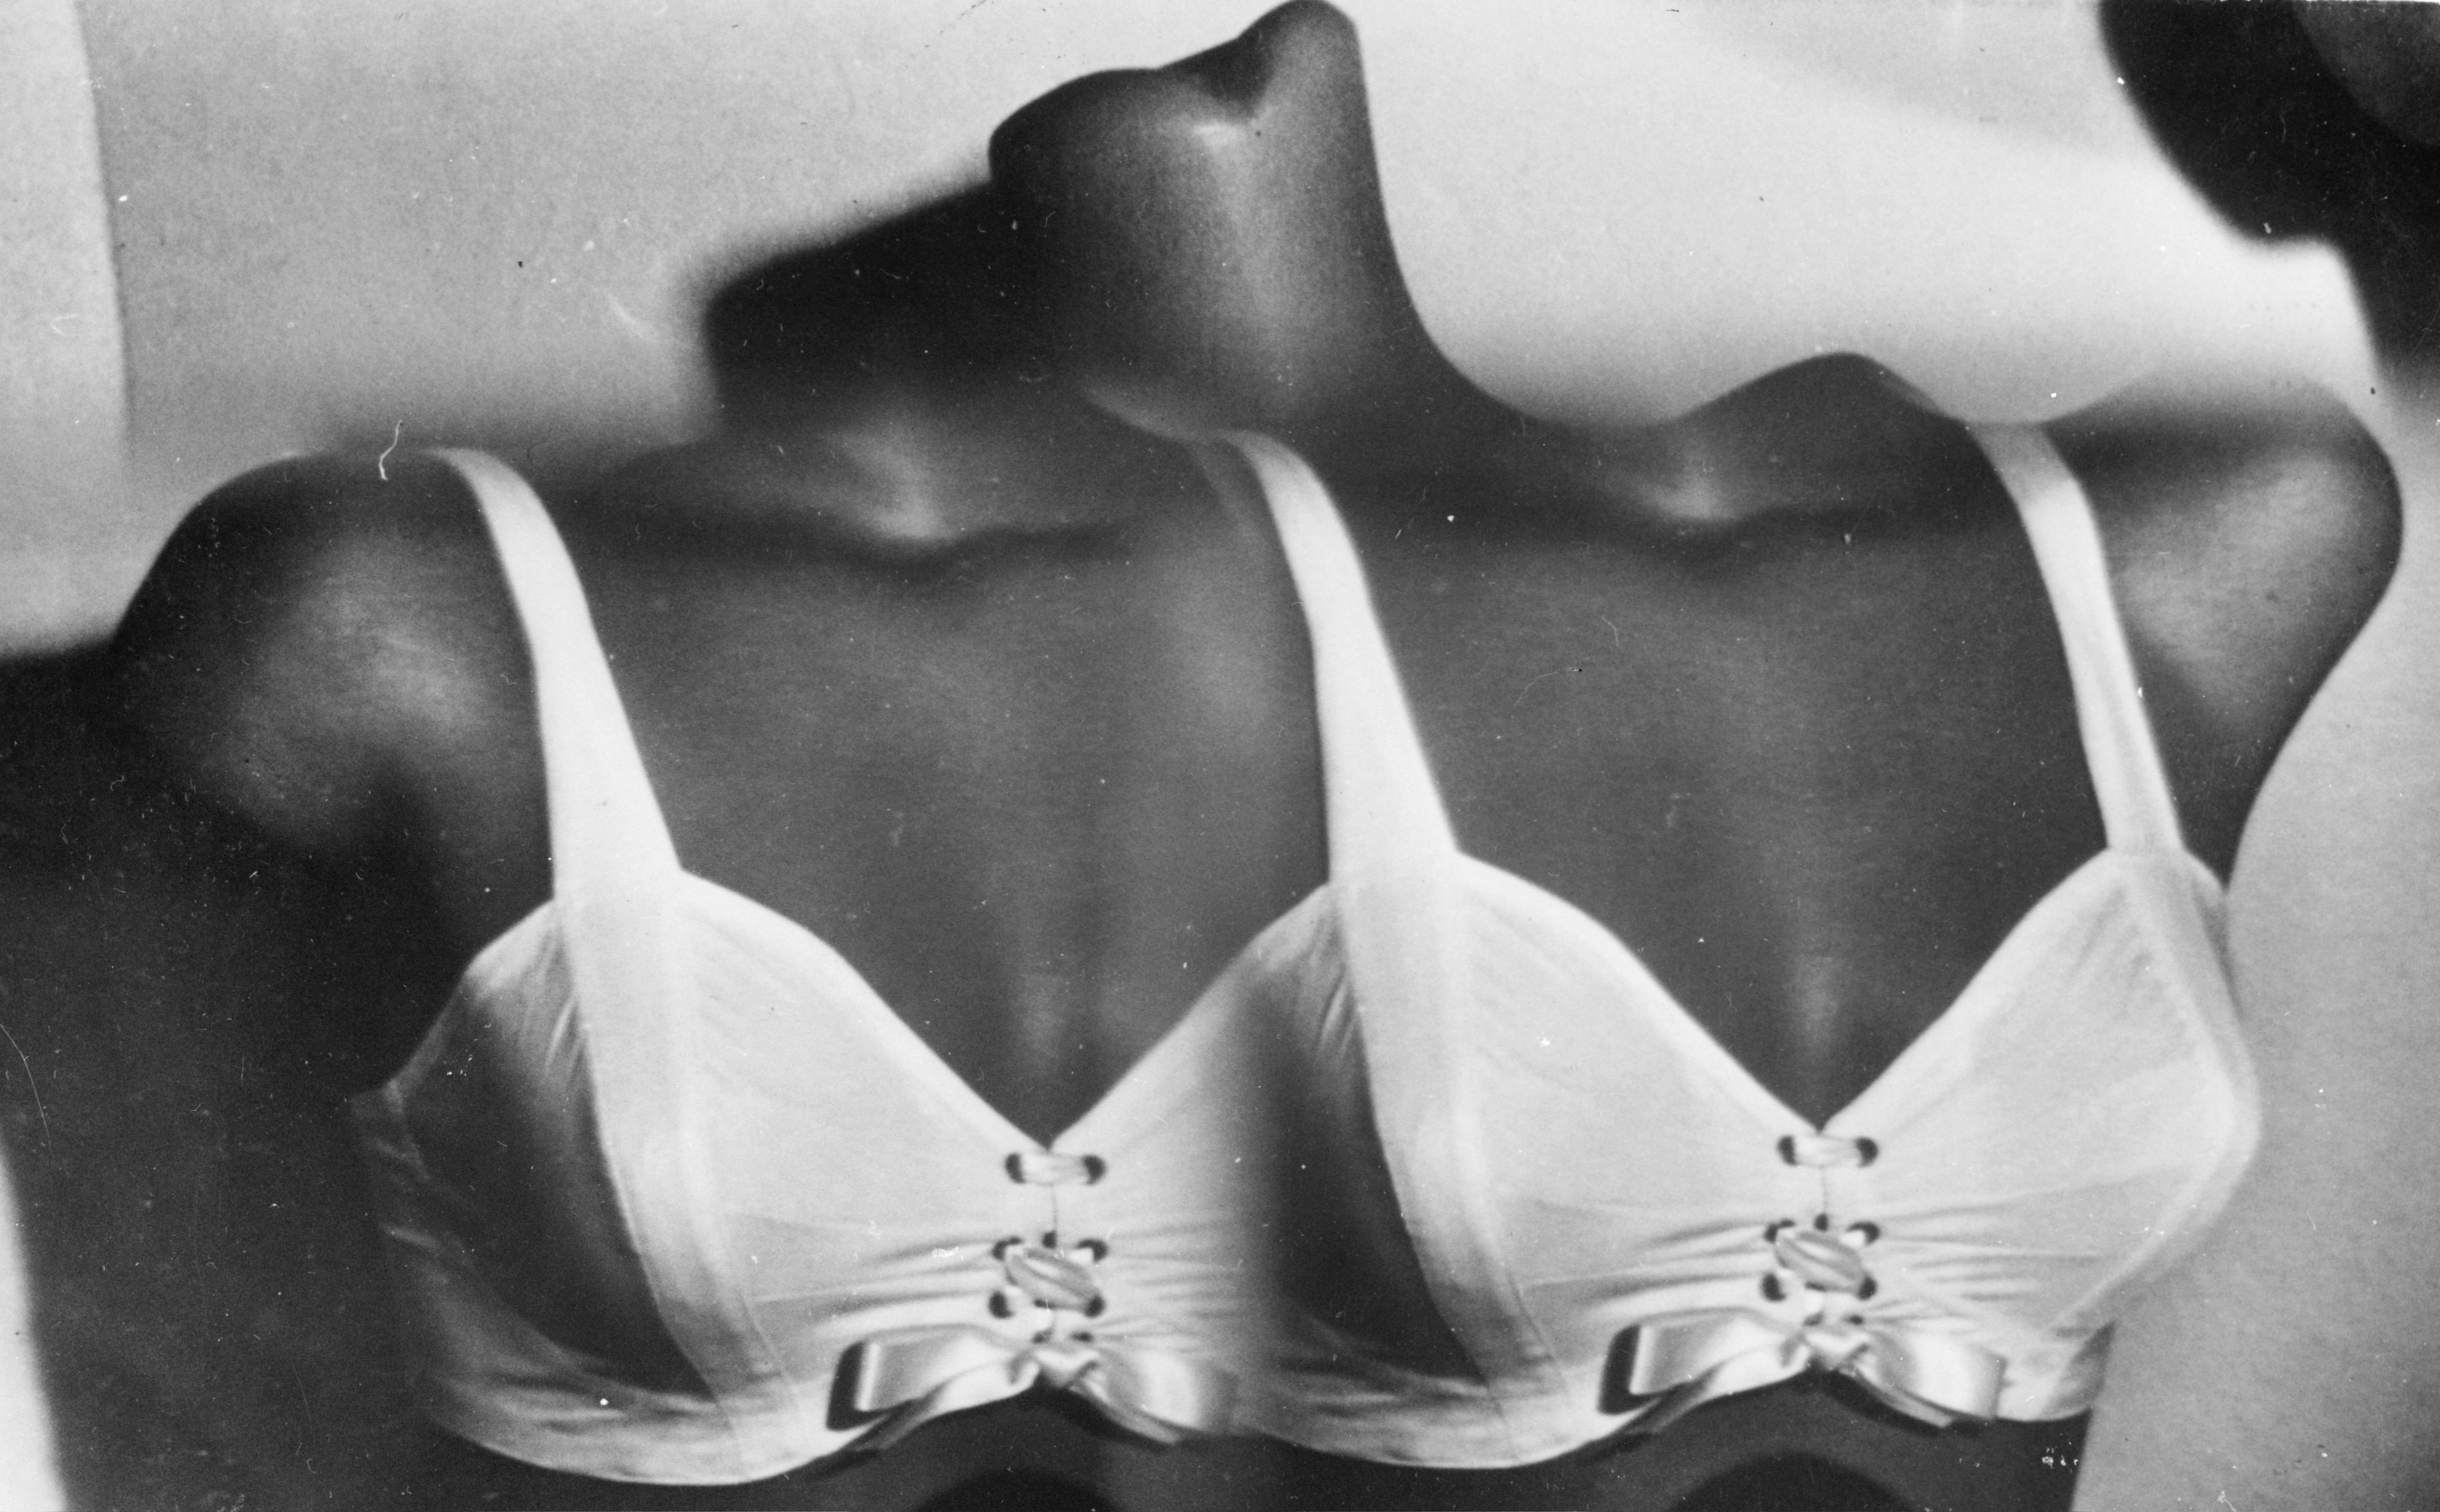 1967 women's Lovable great shape no seam cups bra vintage fashion ad 